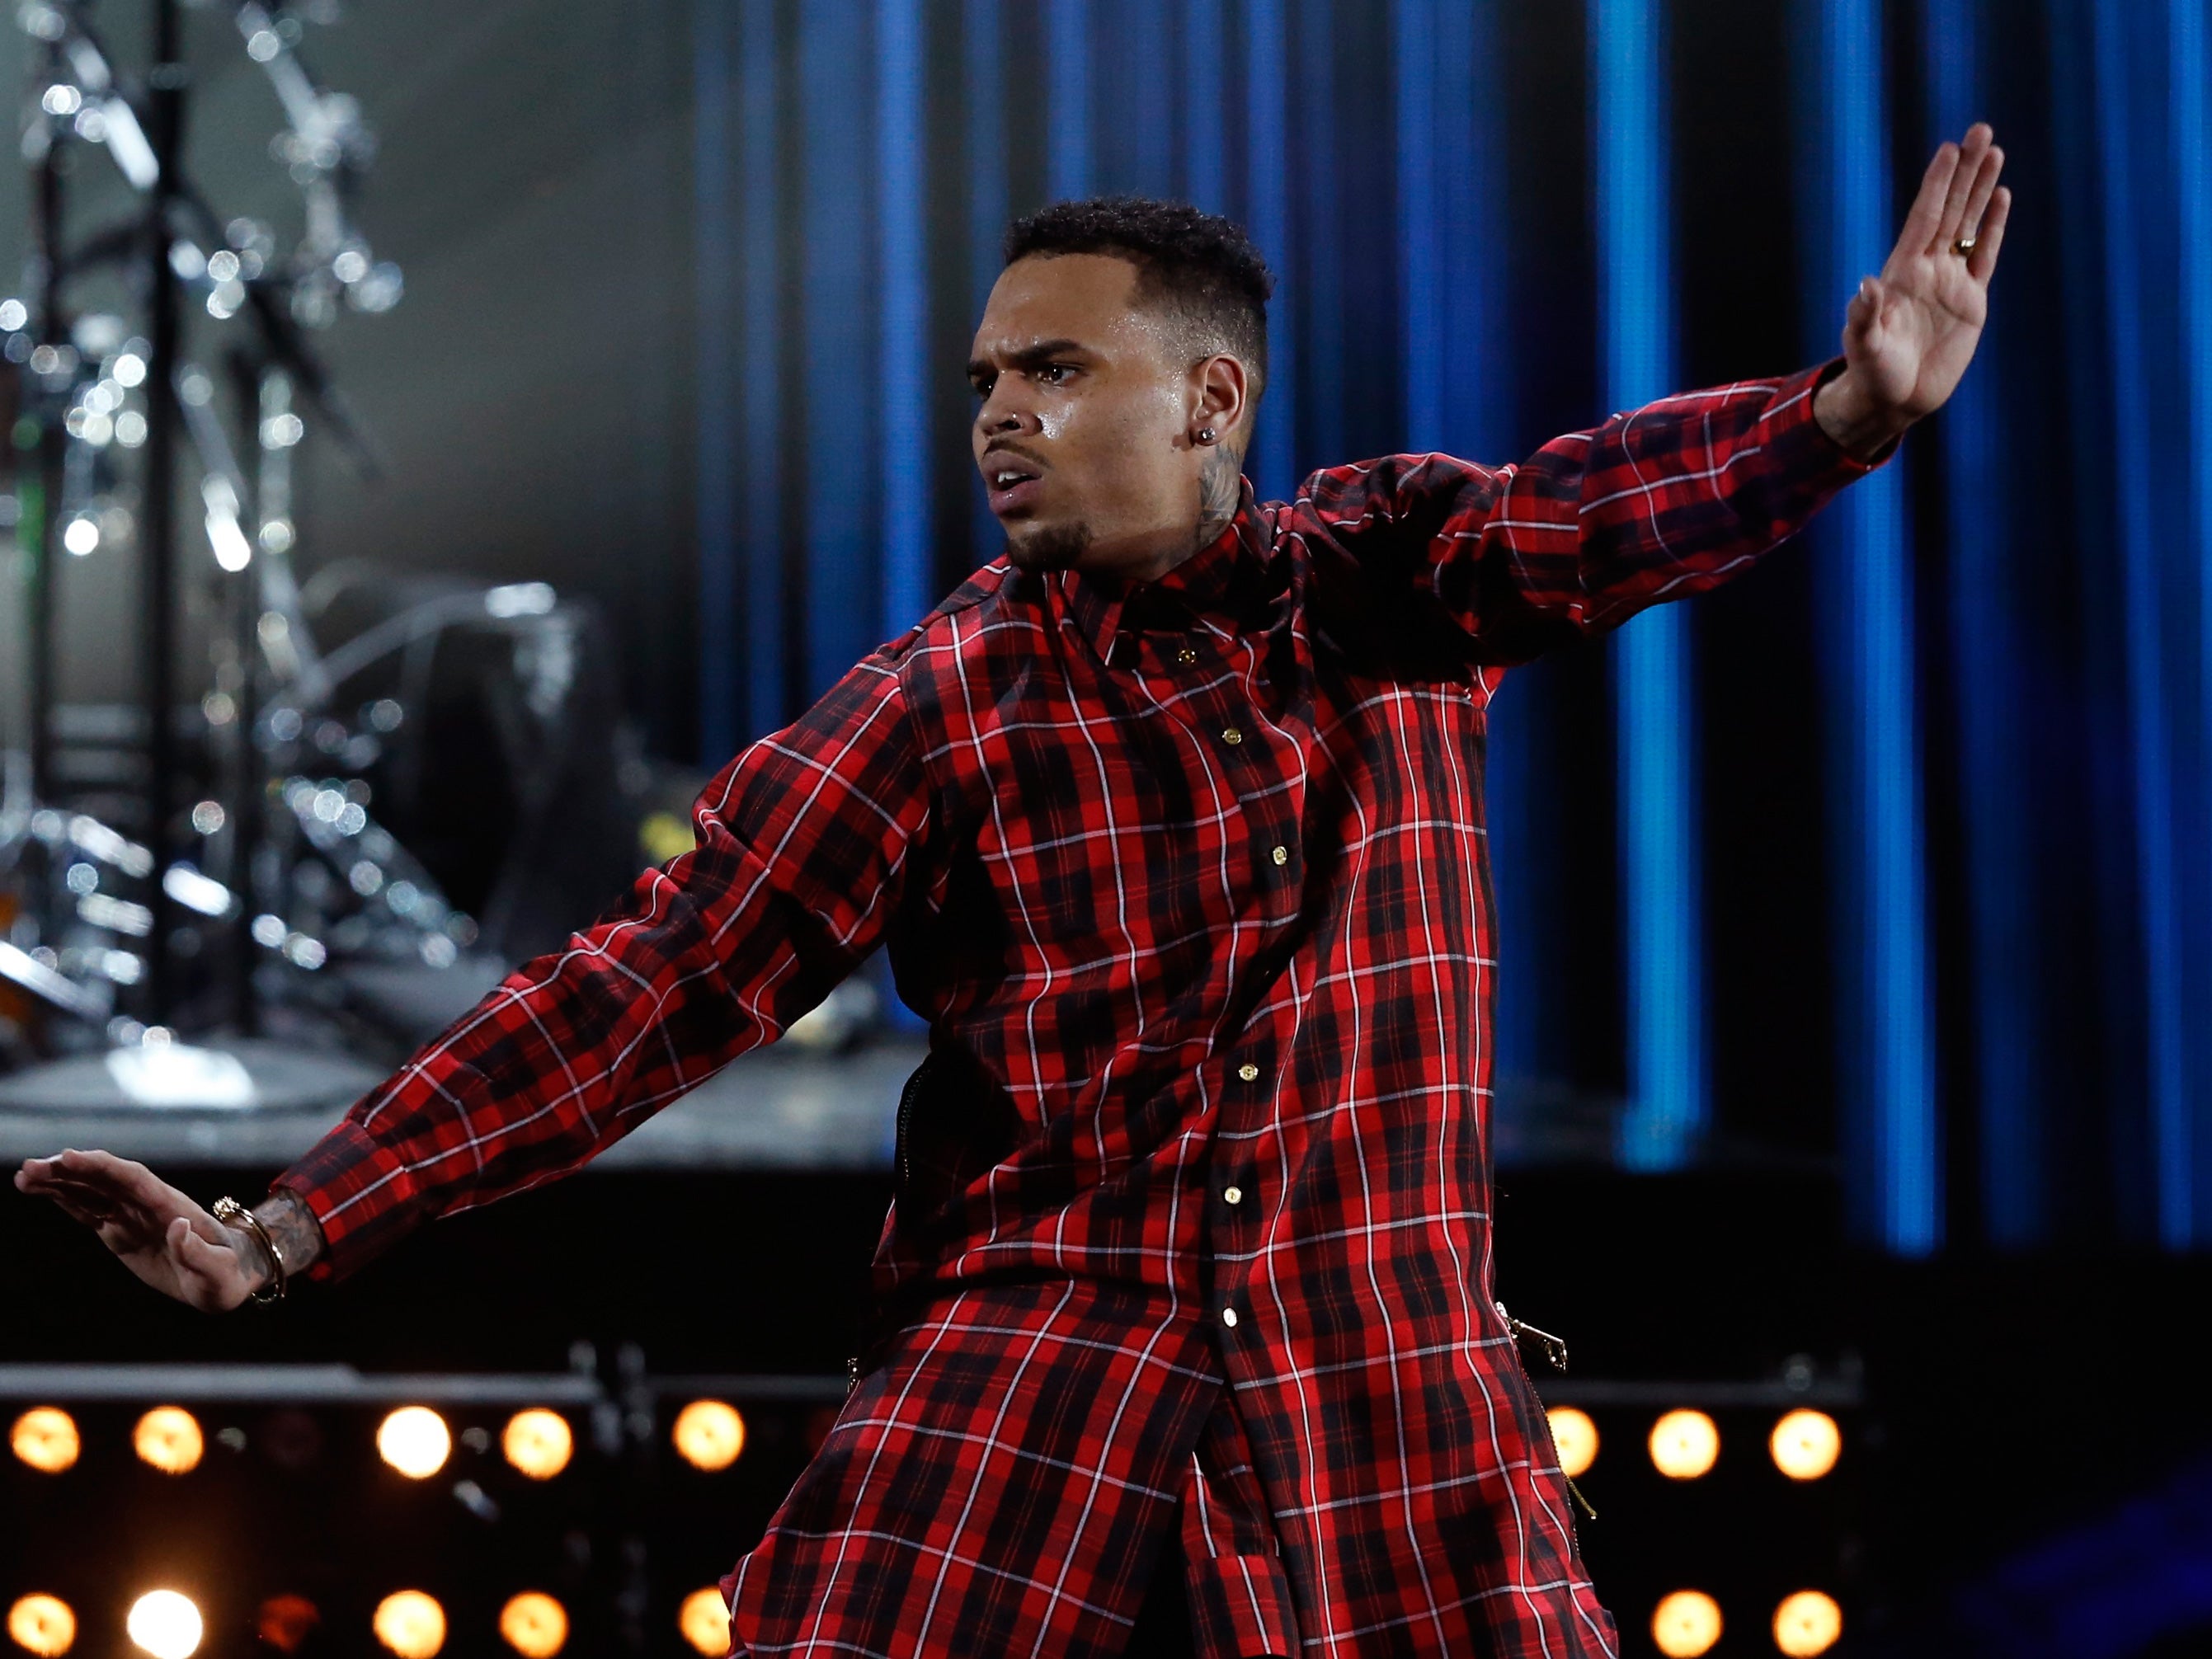 Chris Brown performing at the 2014 BET Awards in June